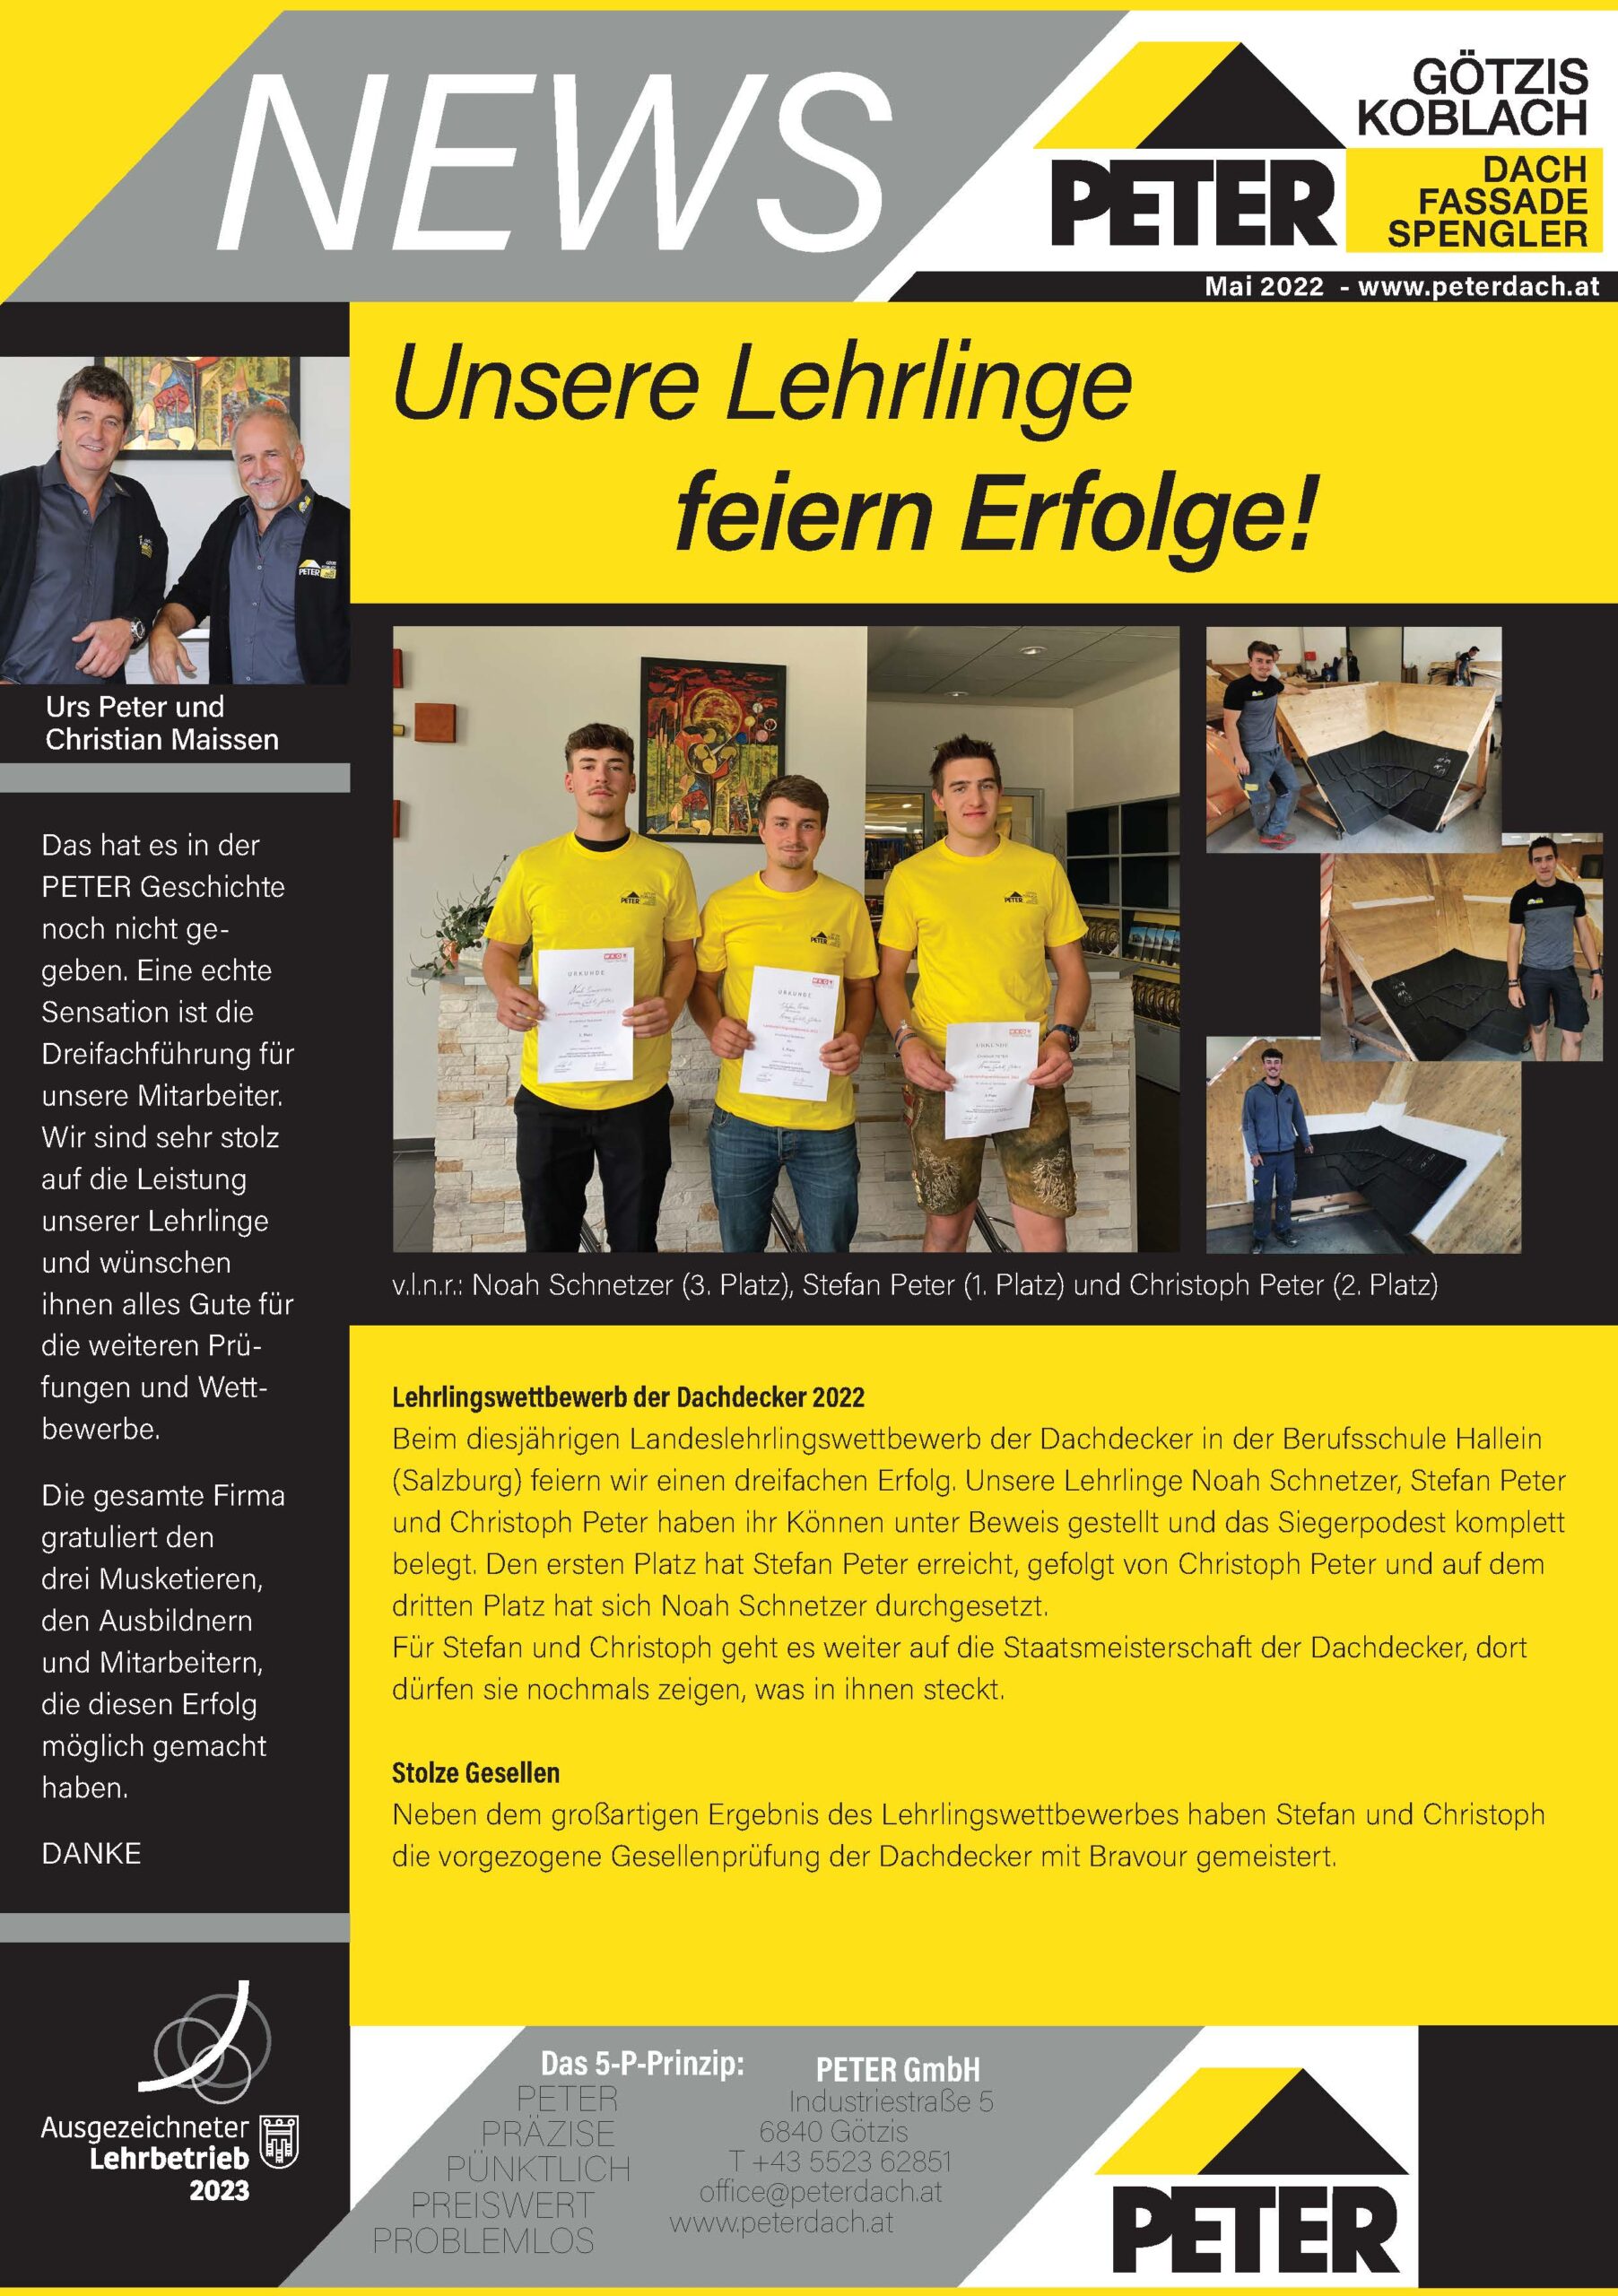 Peter-Dach-Peter-News-Lehrlinge-Erfolge-Rheintal-Vorarlberg-Götzis-Mai-22